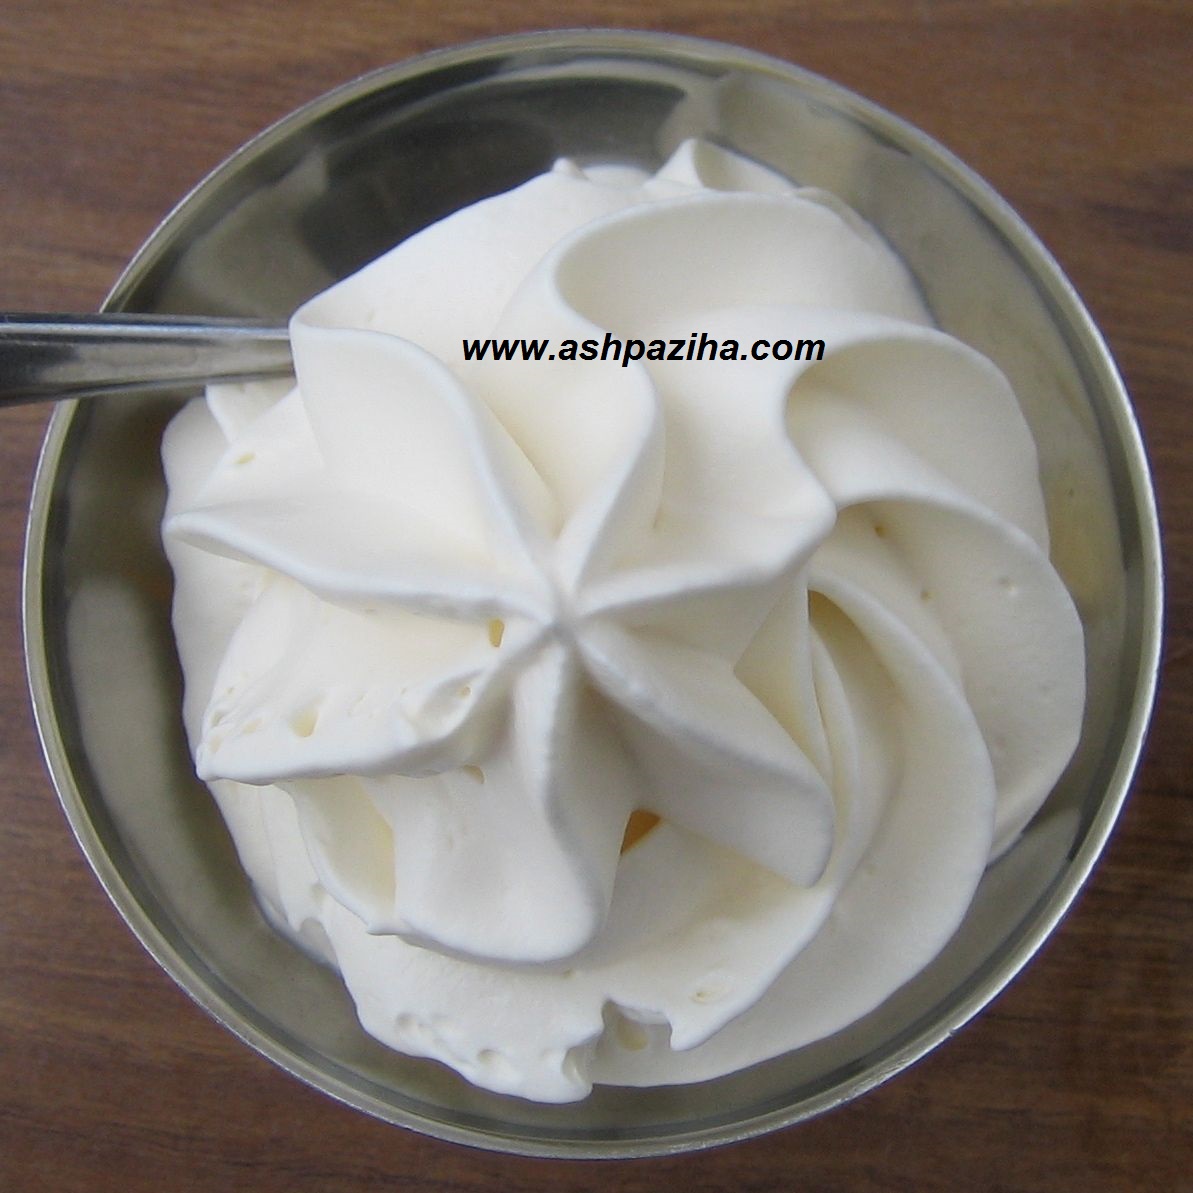 Mode - preparing - Cheese - Creamy - & Interior (1)